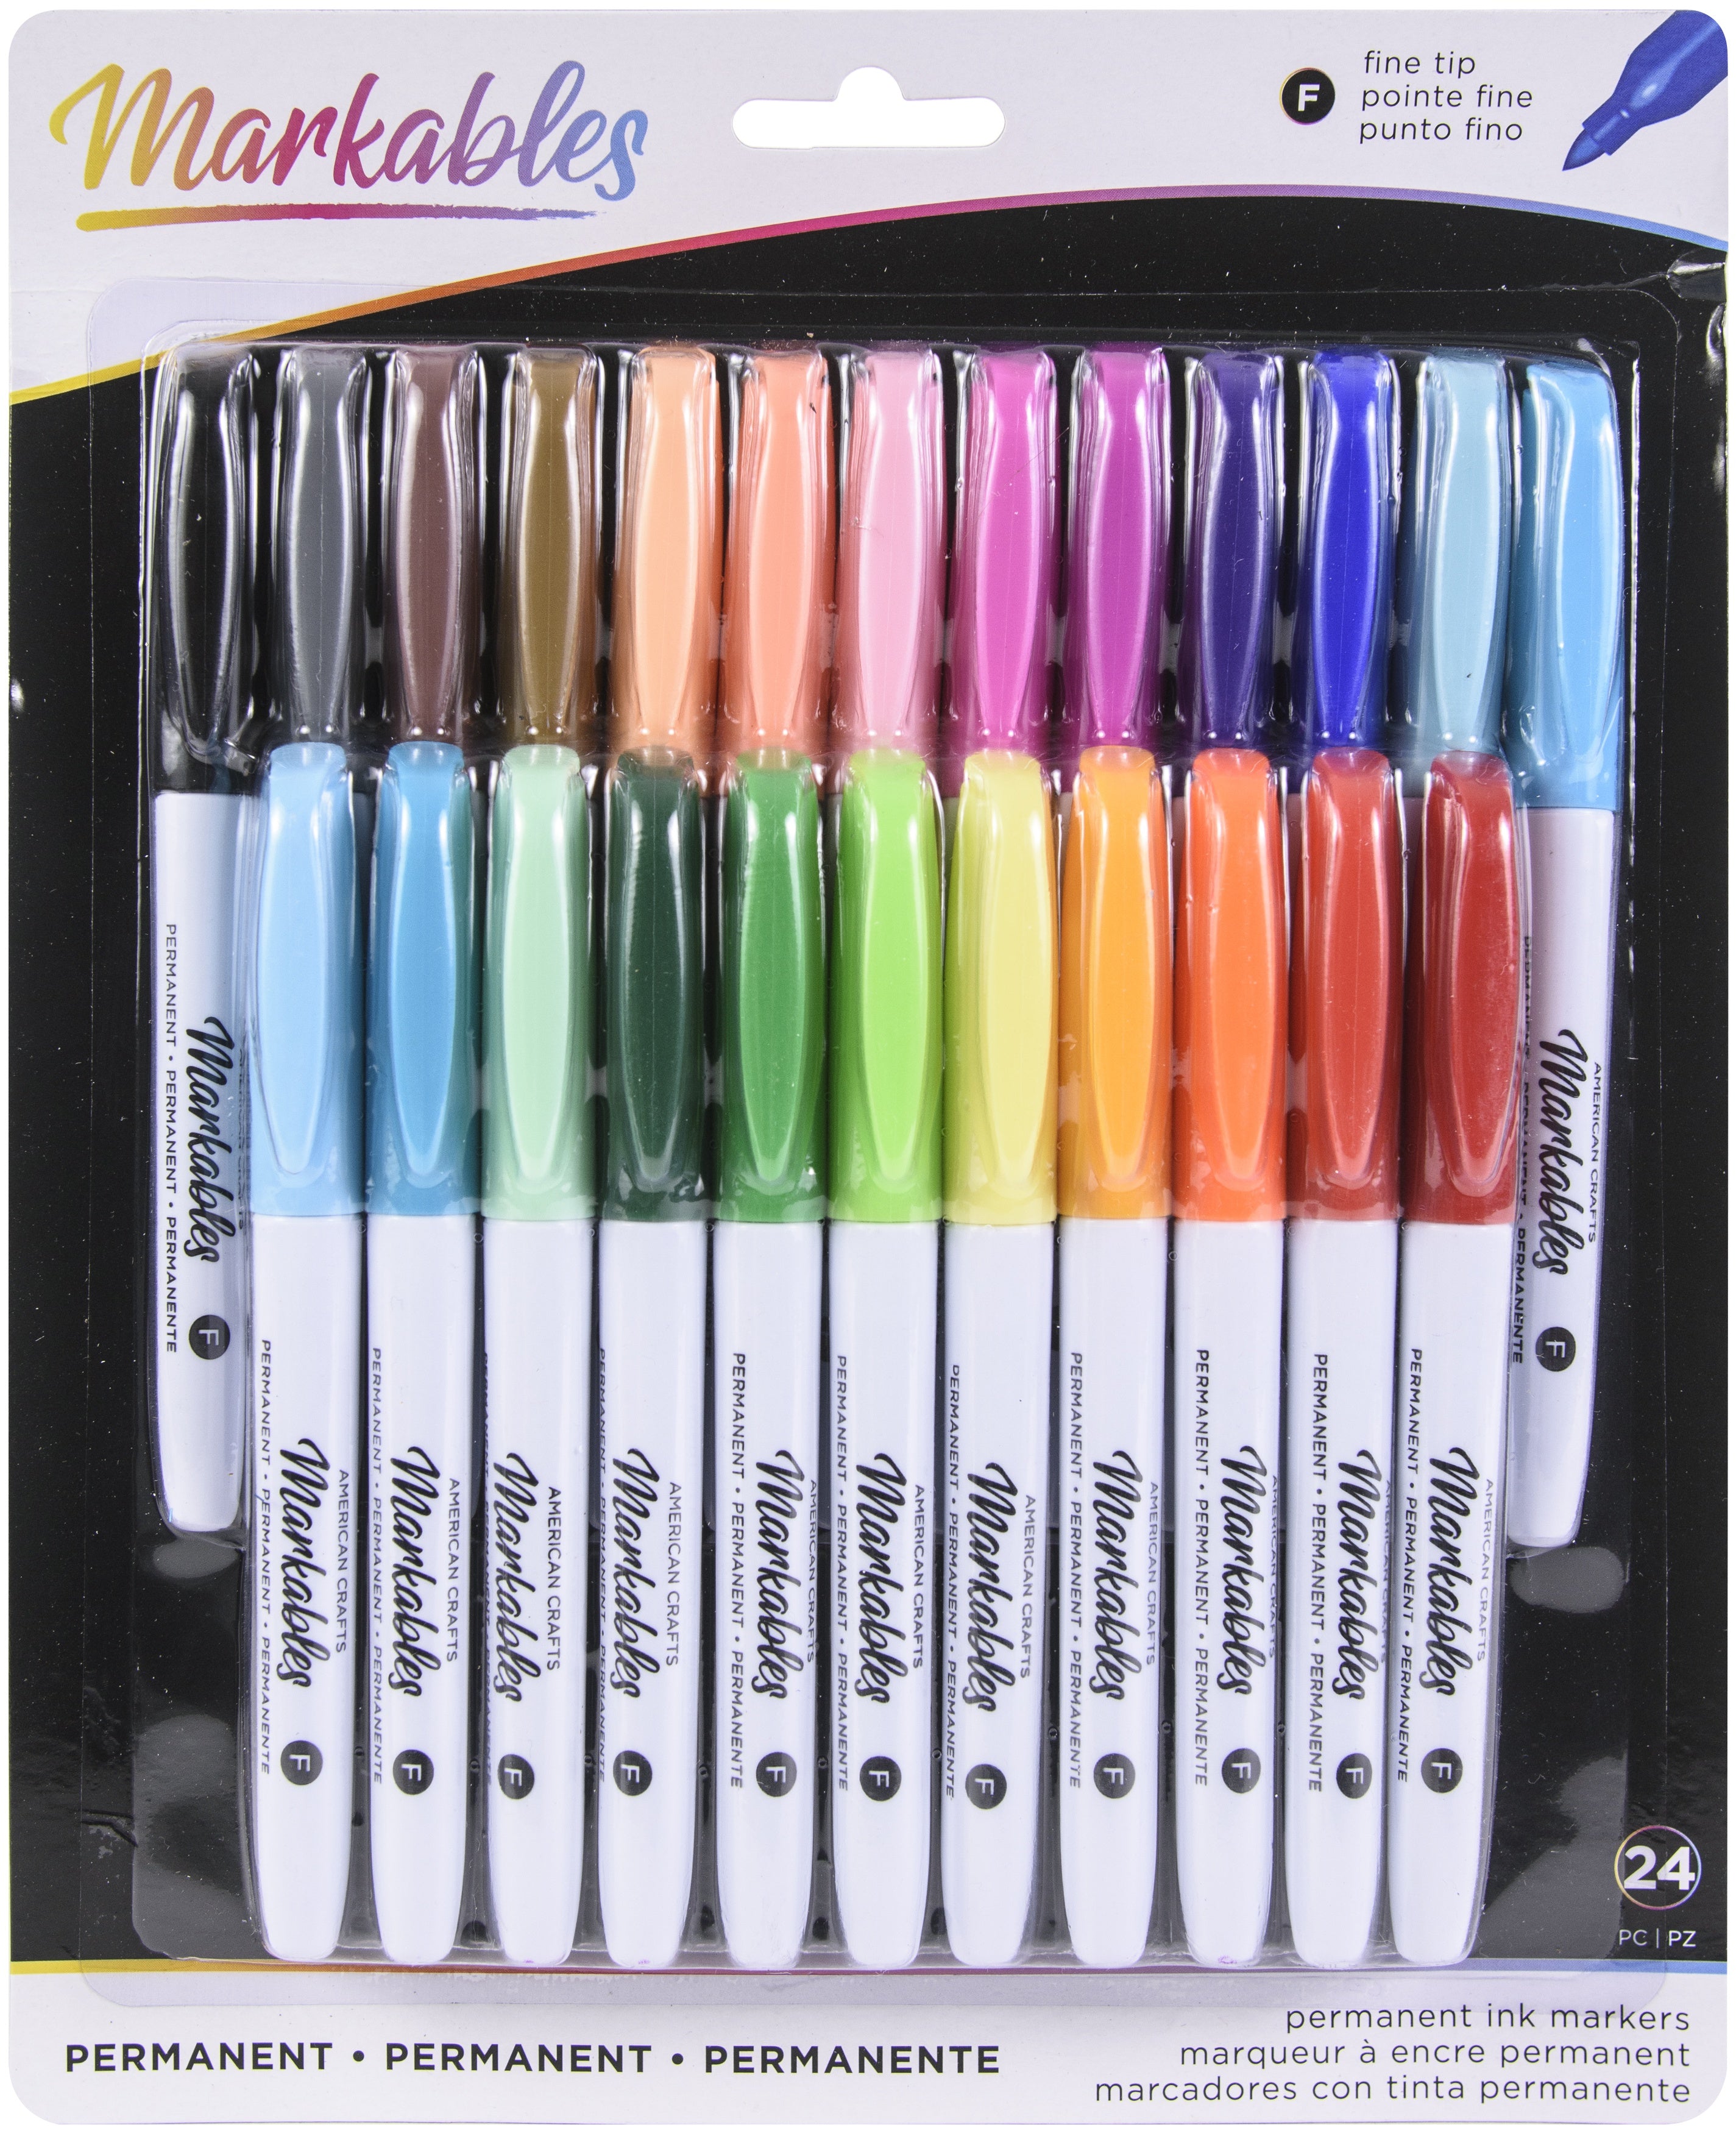   Basics Felt Tip Marker Pens, 24-Pack, Assorted